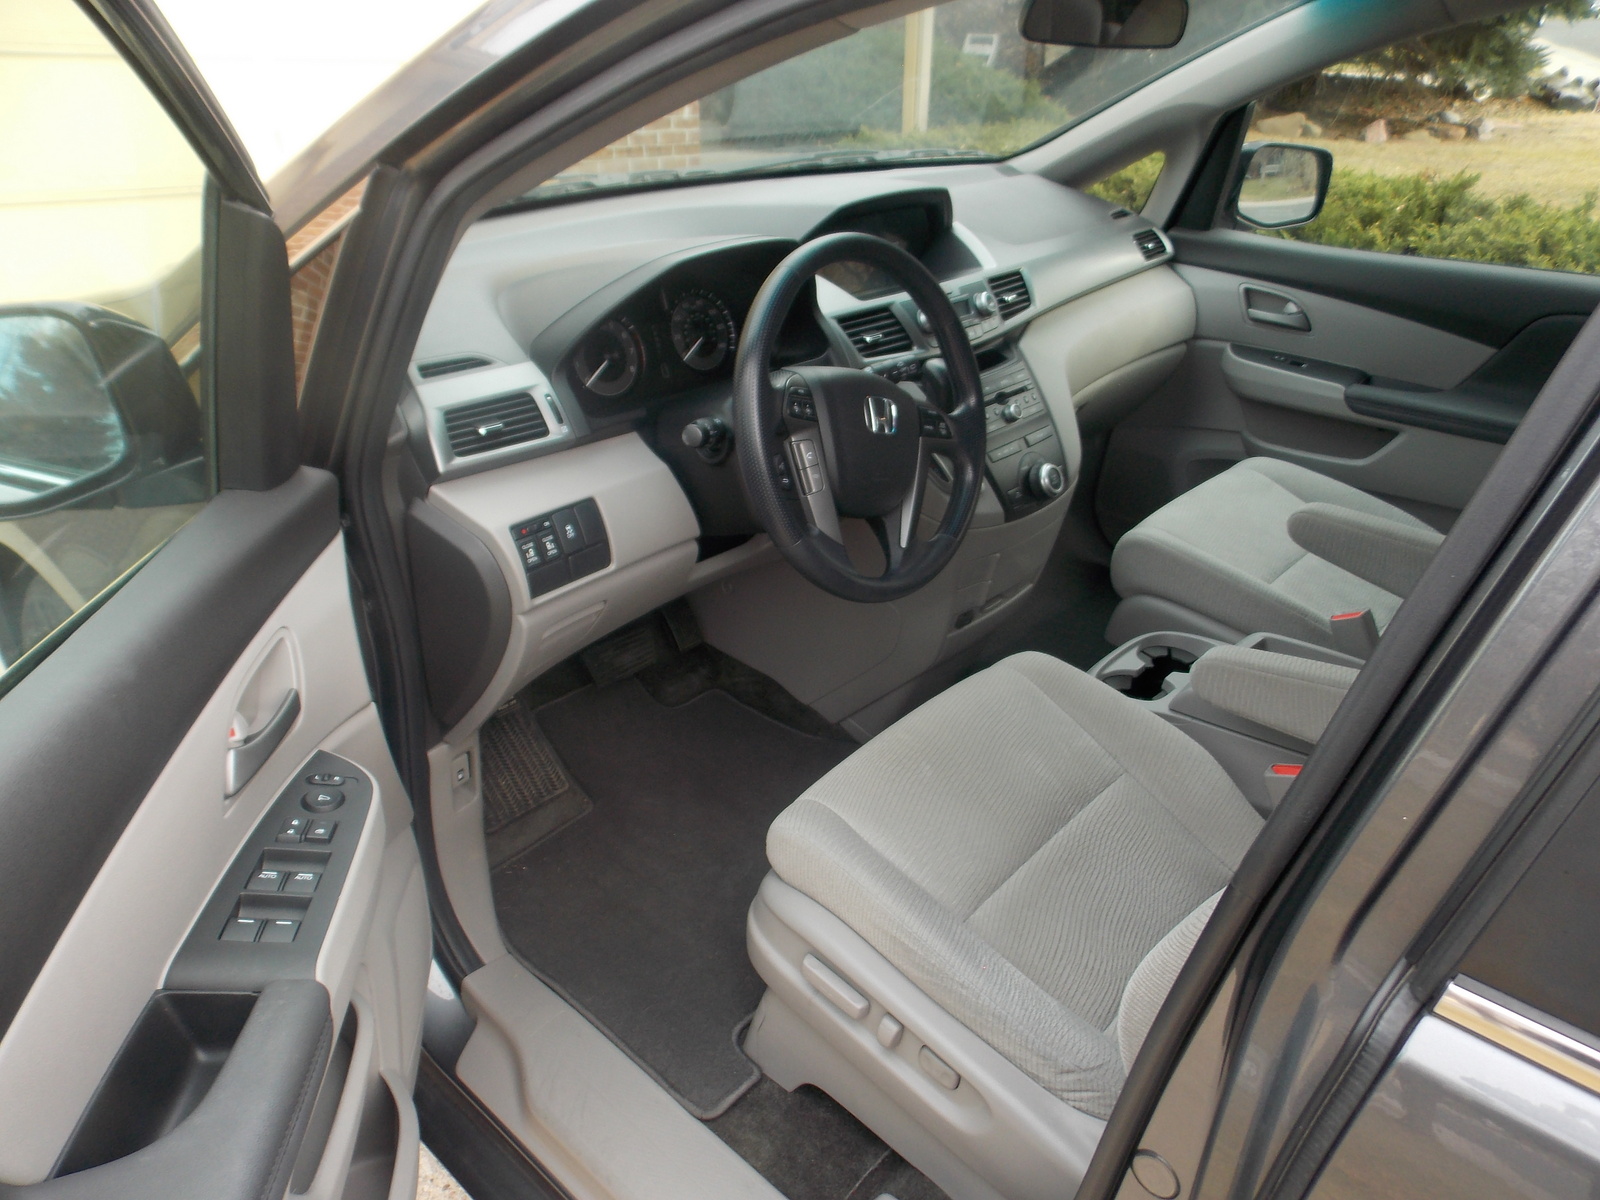 2012 Honda Odyssey - Review - CarGurus